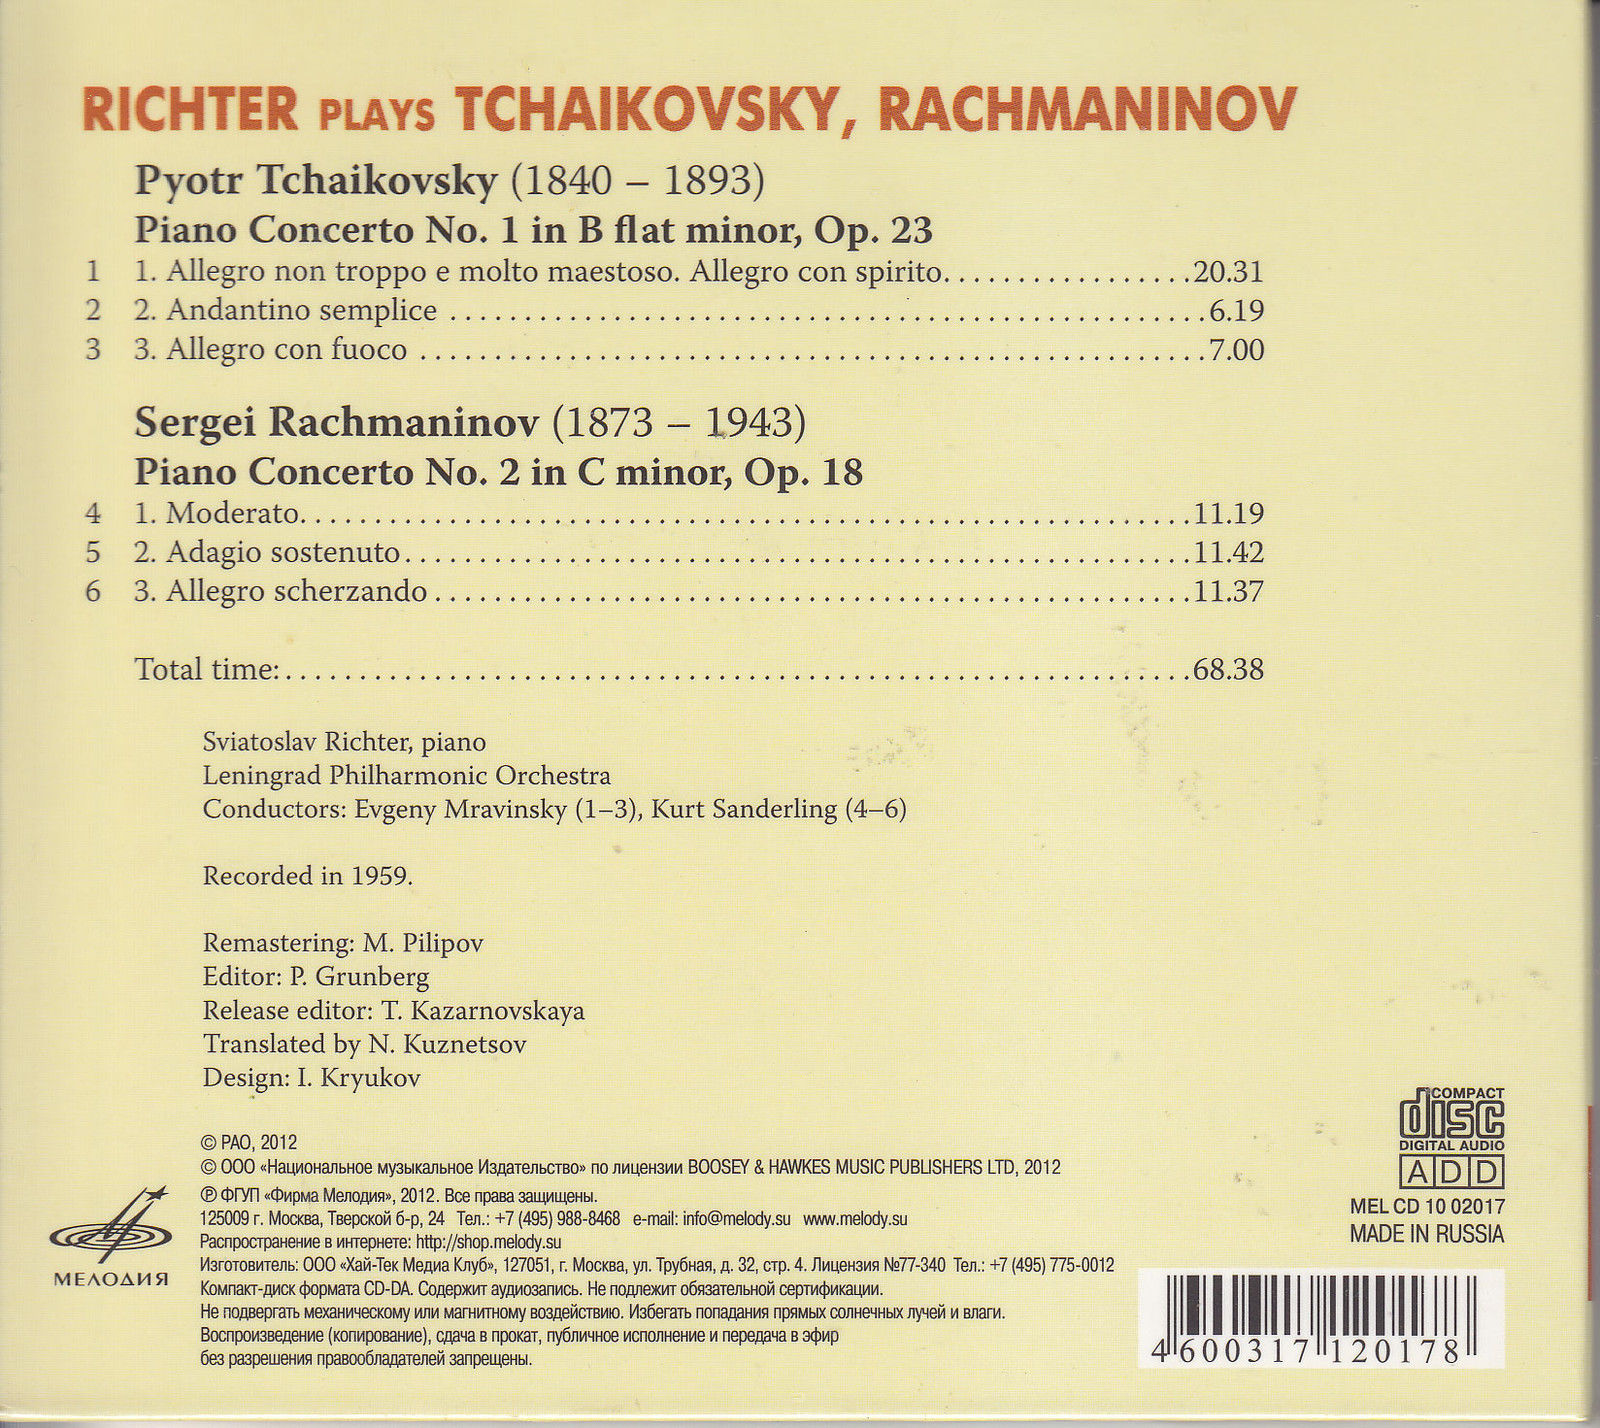 Richter plays Tchaikovsky, Rachmaninov